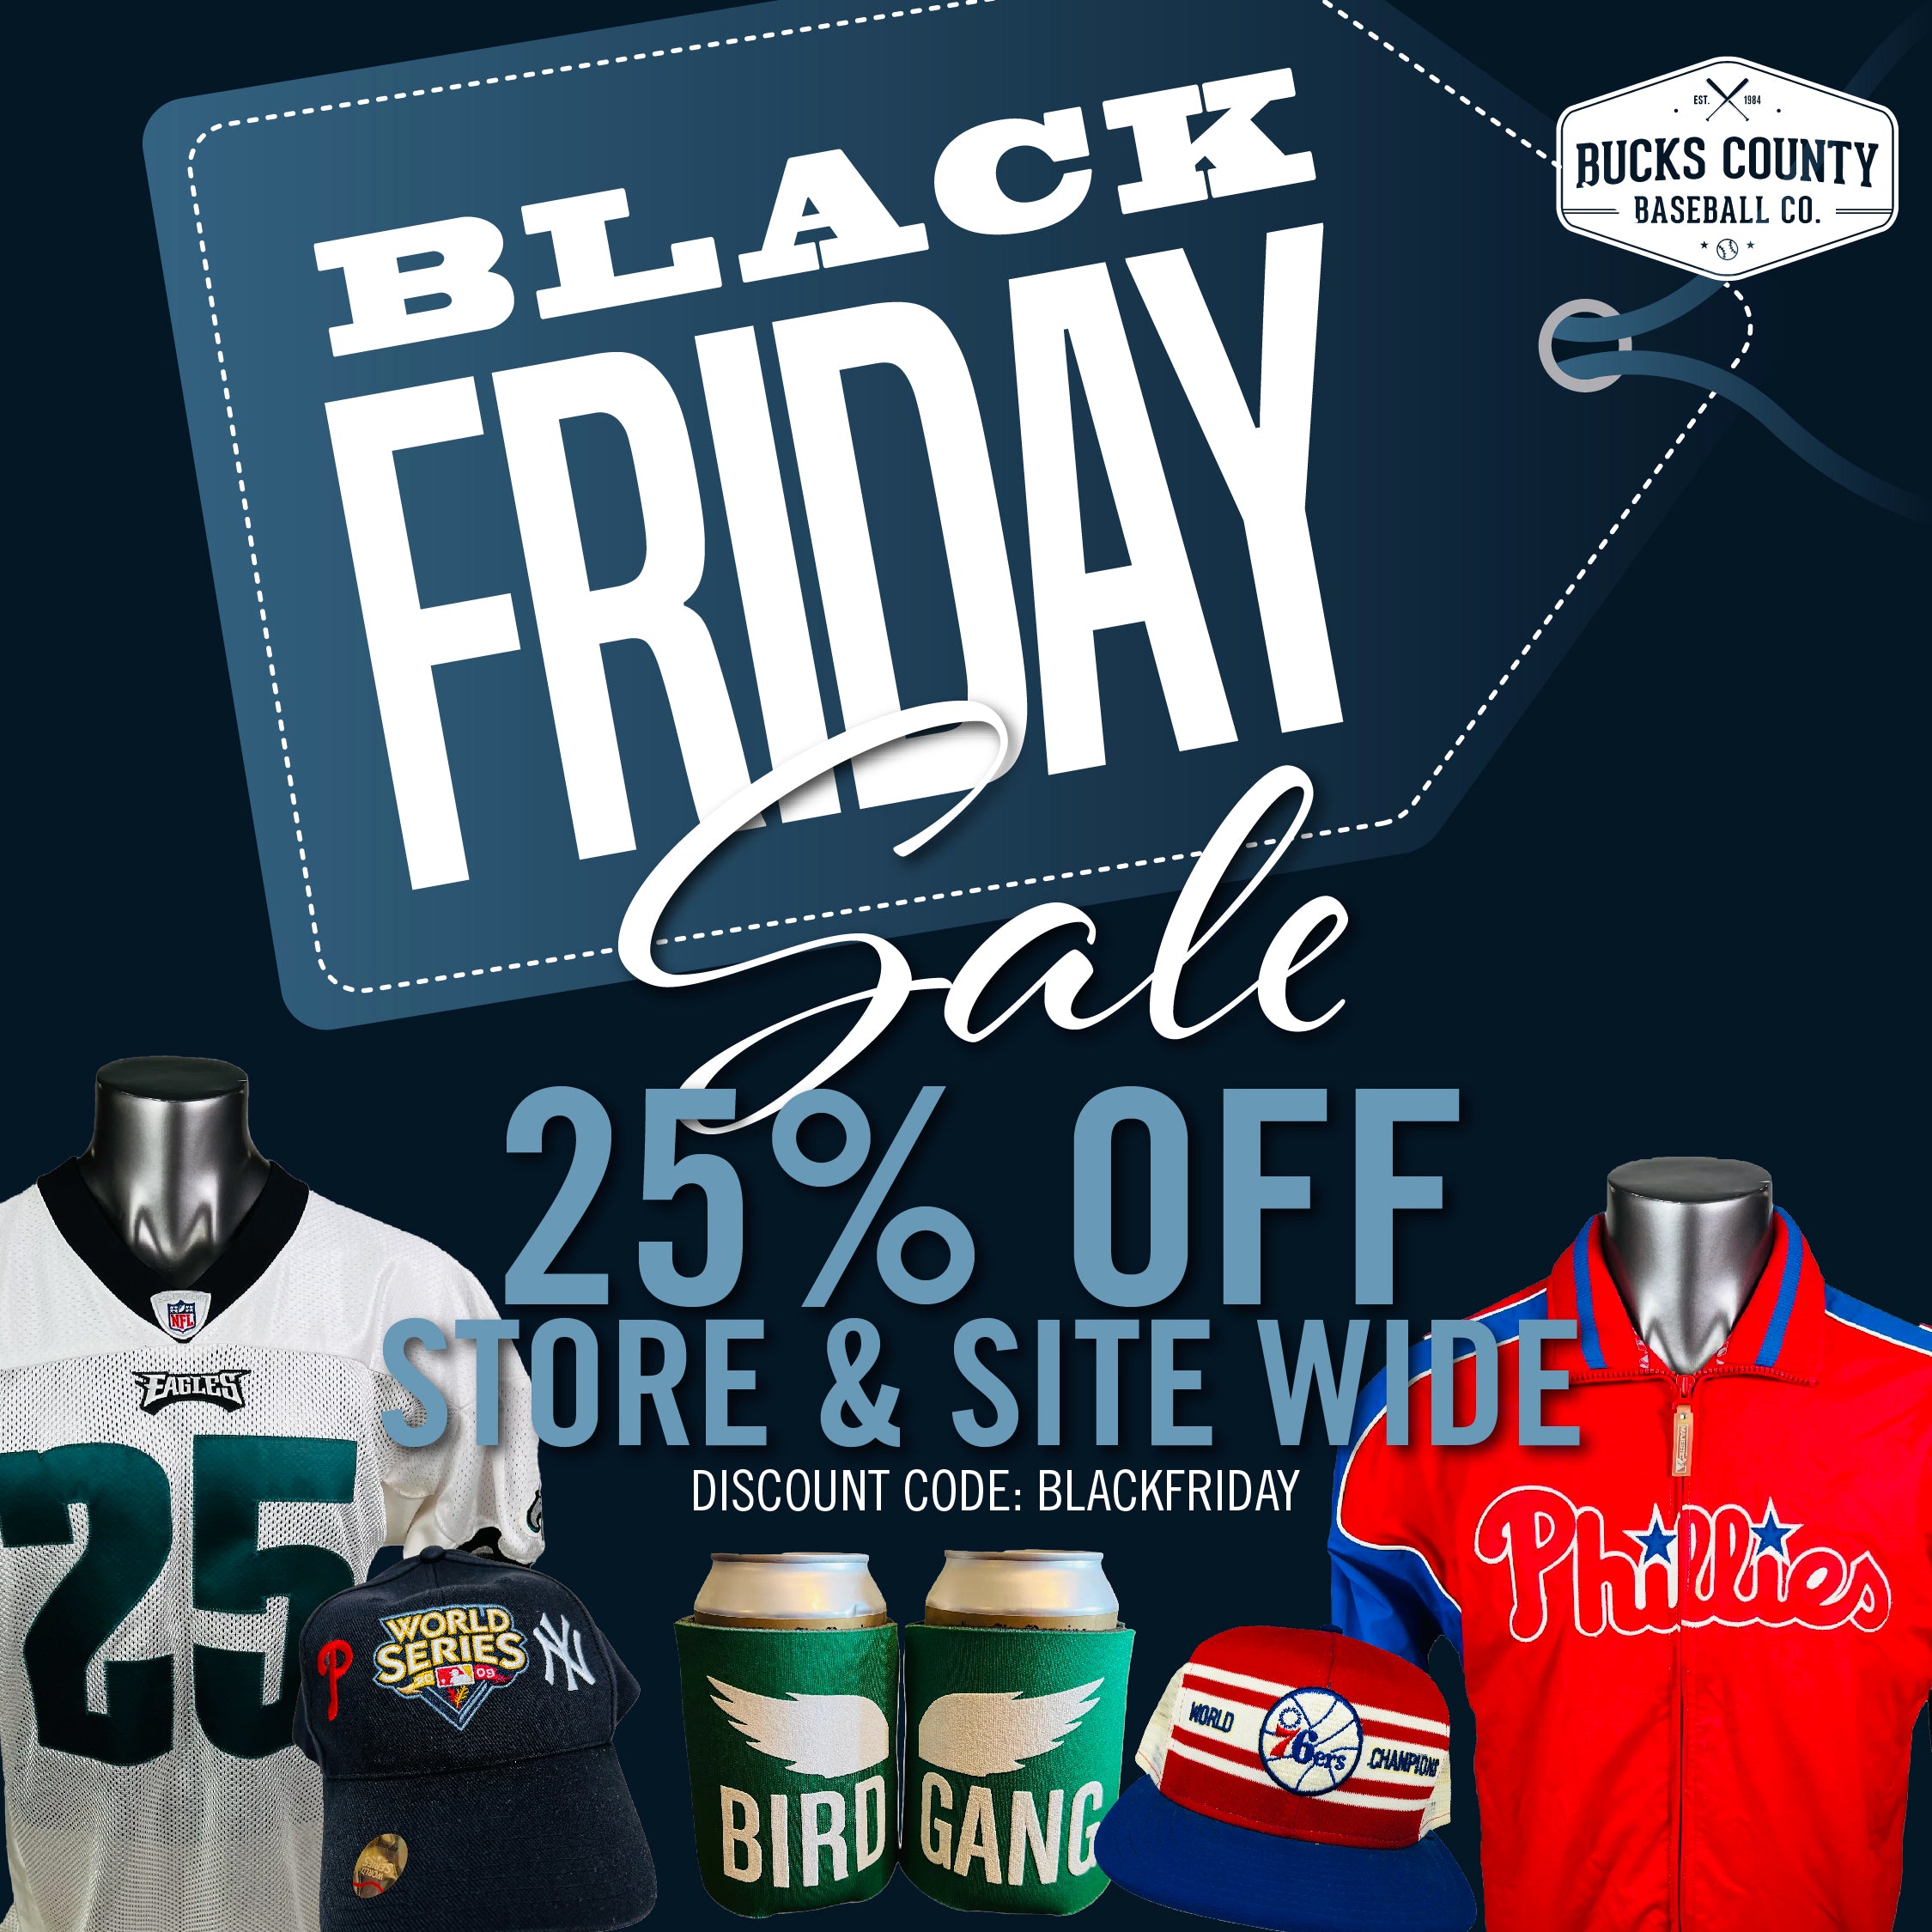 9th Annual Black Friday Sale - Bucks County Baseball Co.